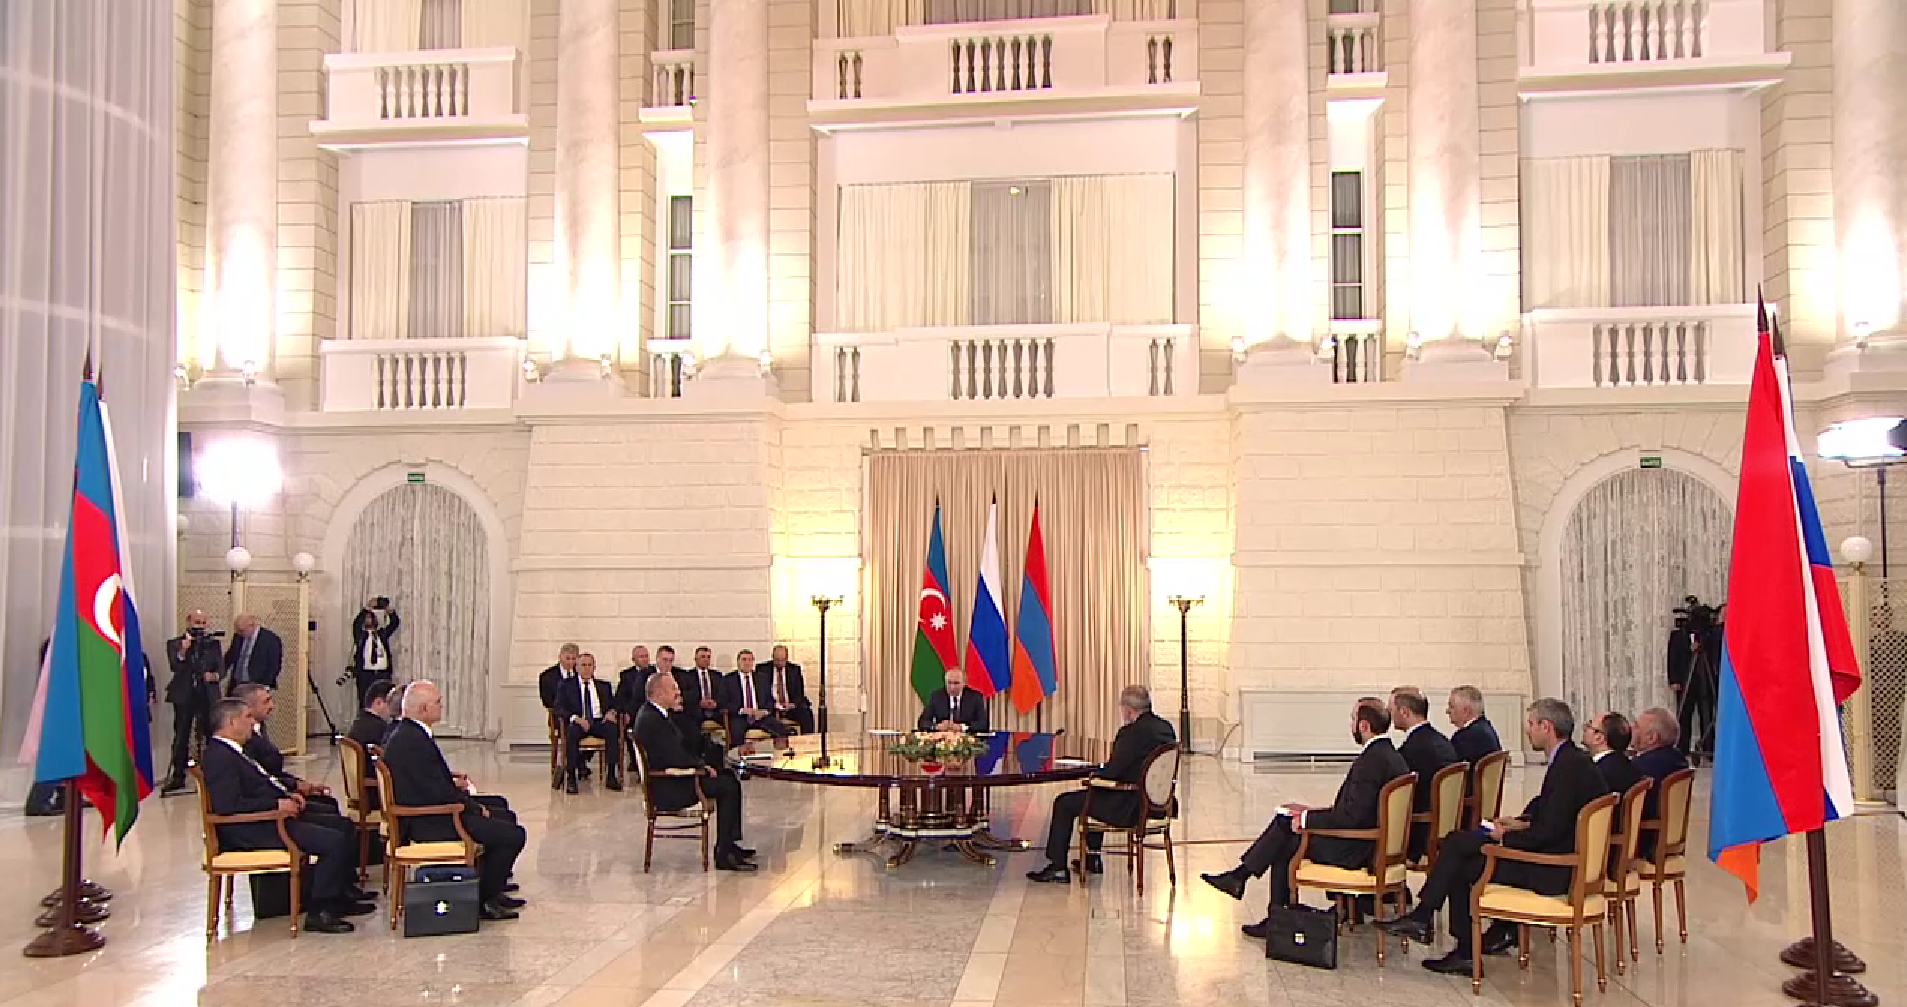 Leaders of Armenia, Azerbaijan, Russia release joint statement after Sochi summit